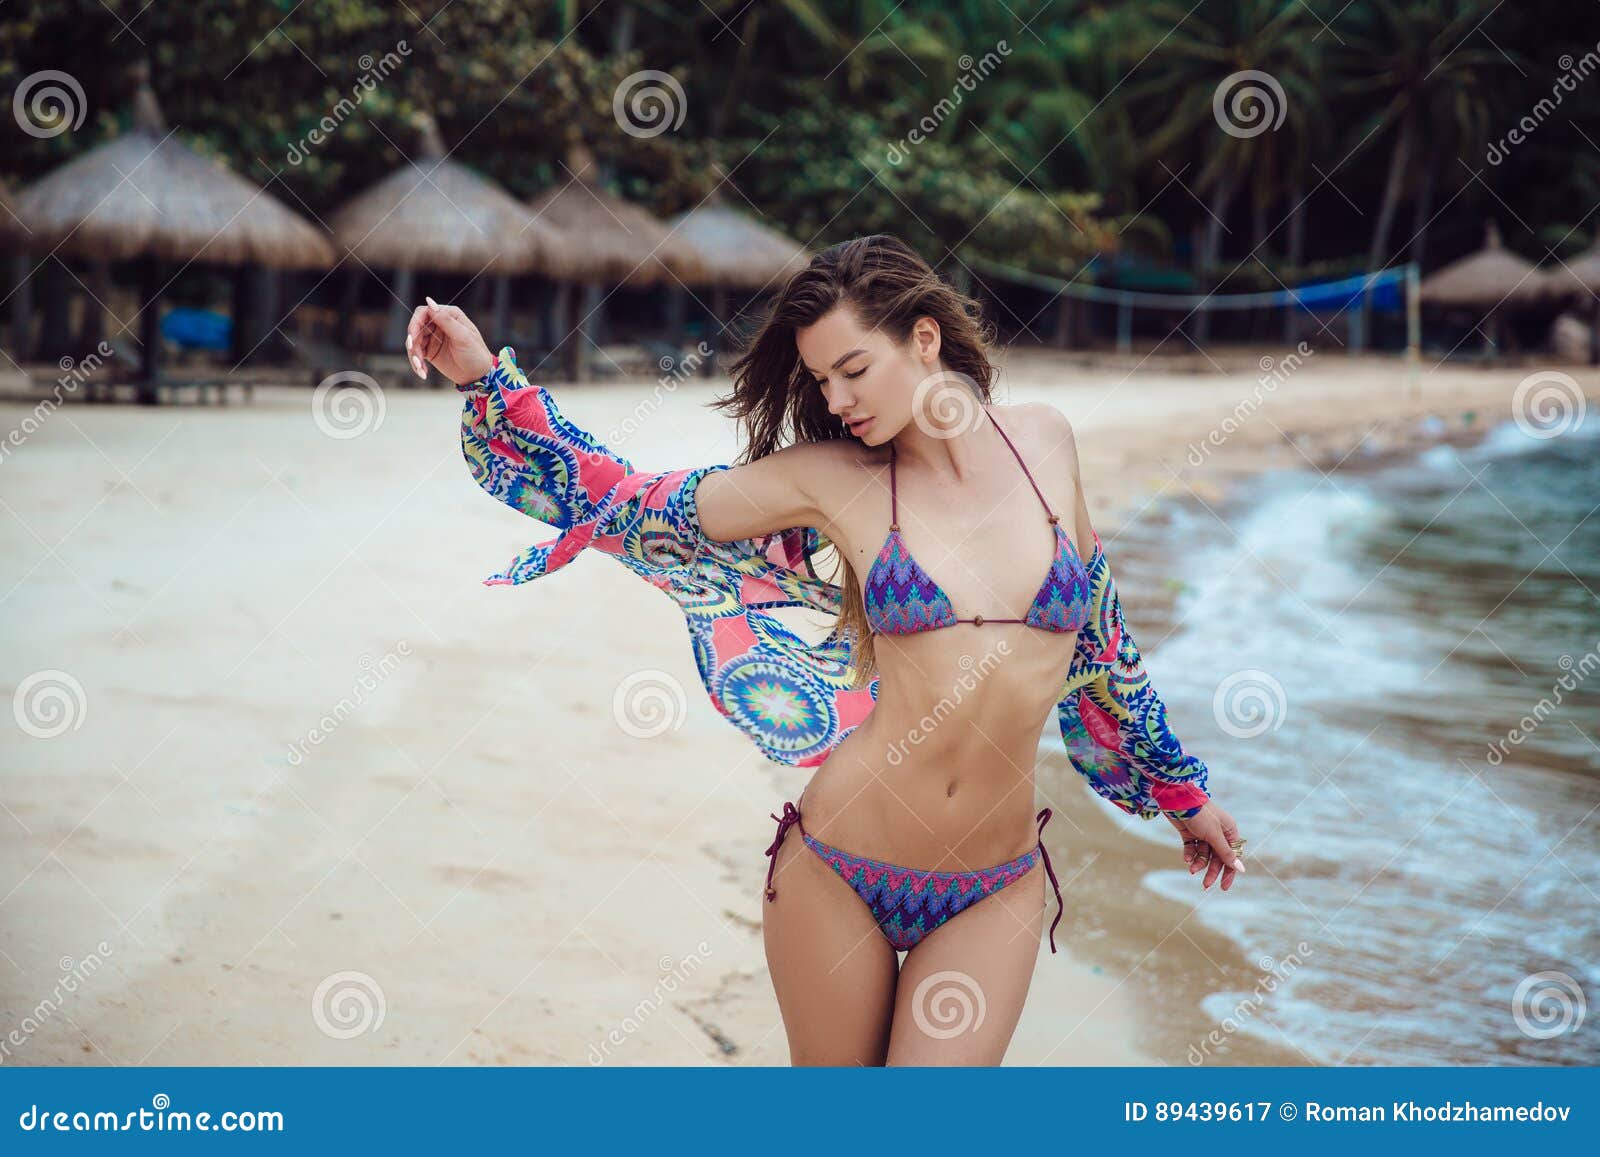 real beach voyeur amazing brunette teen Adult Pics Hq